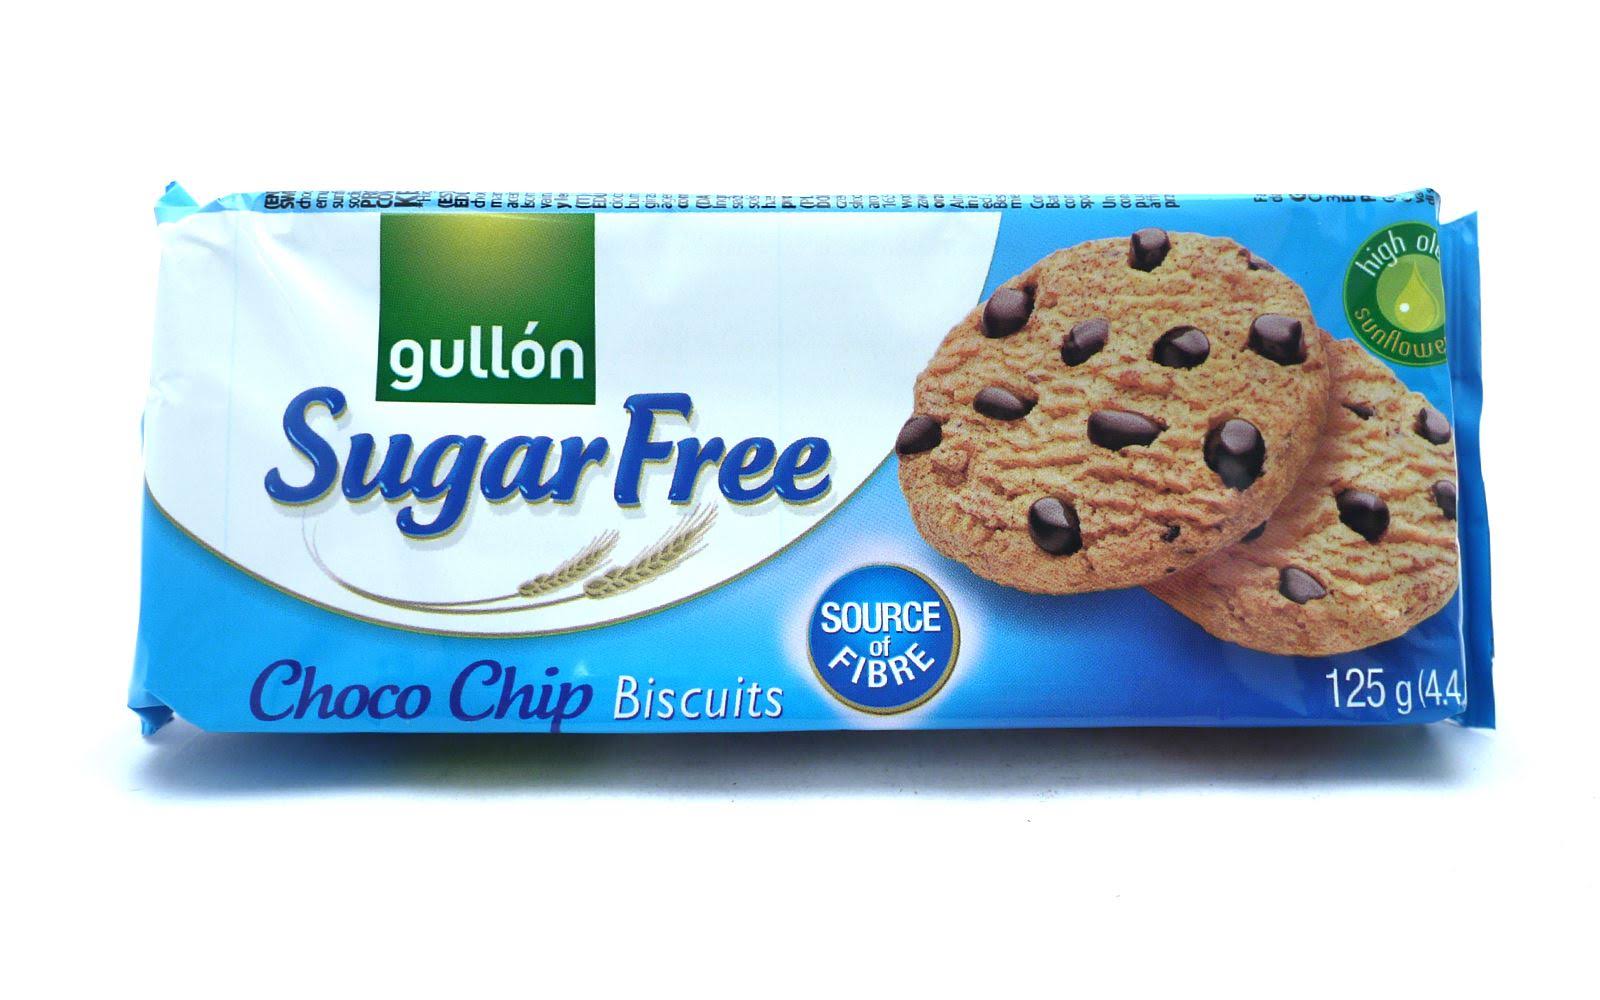 Gullon Sugar Free Bisquits - Choco Chip, 125g